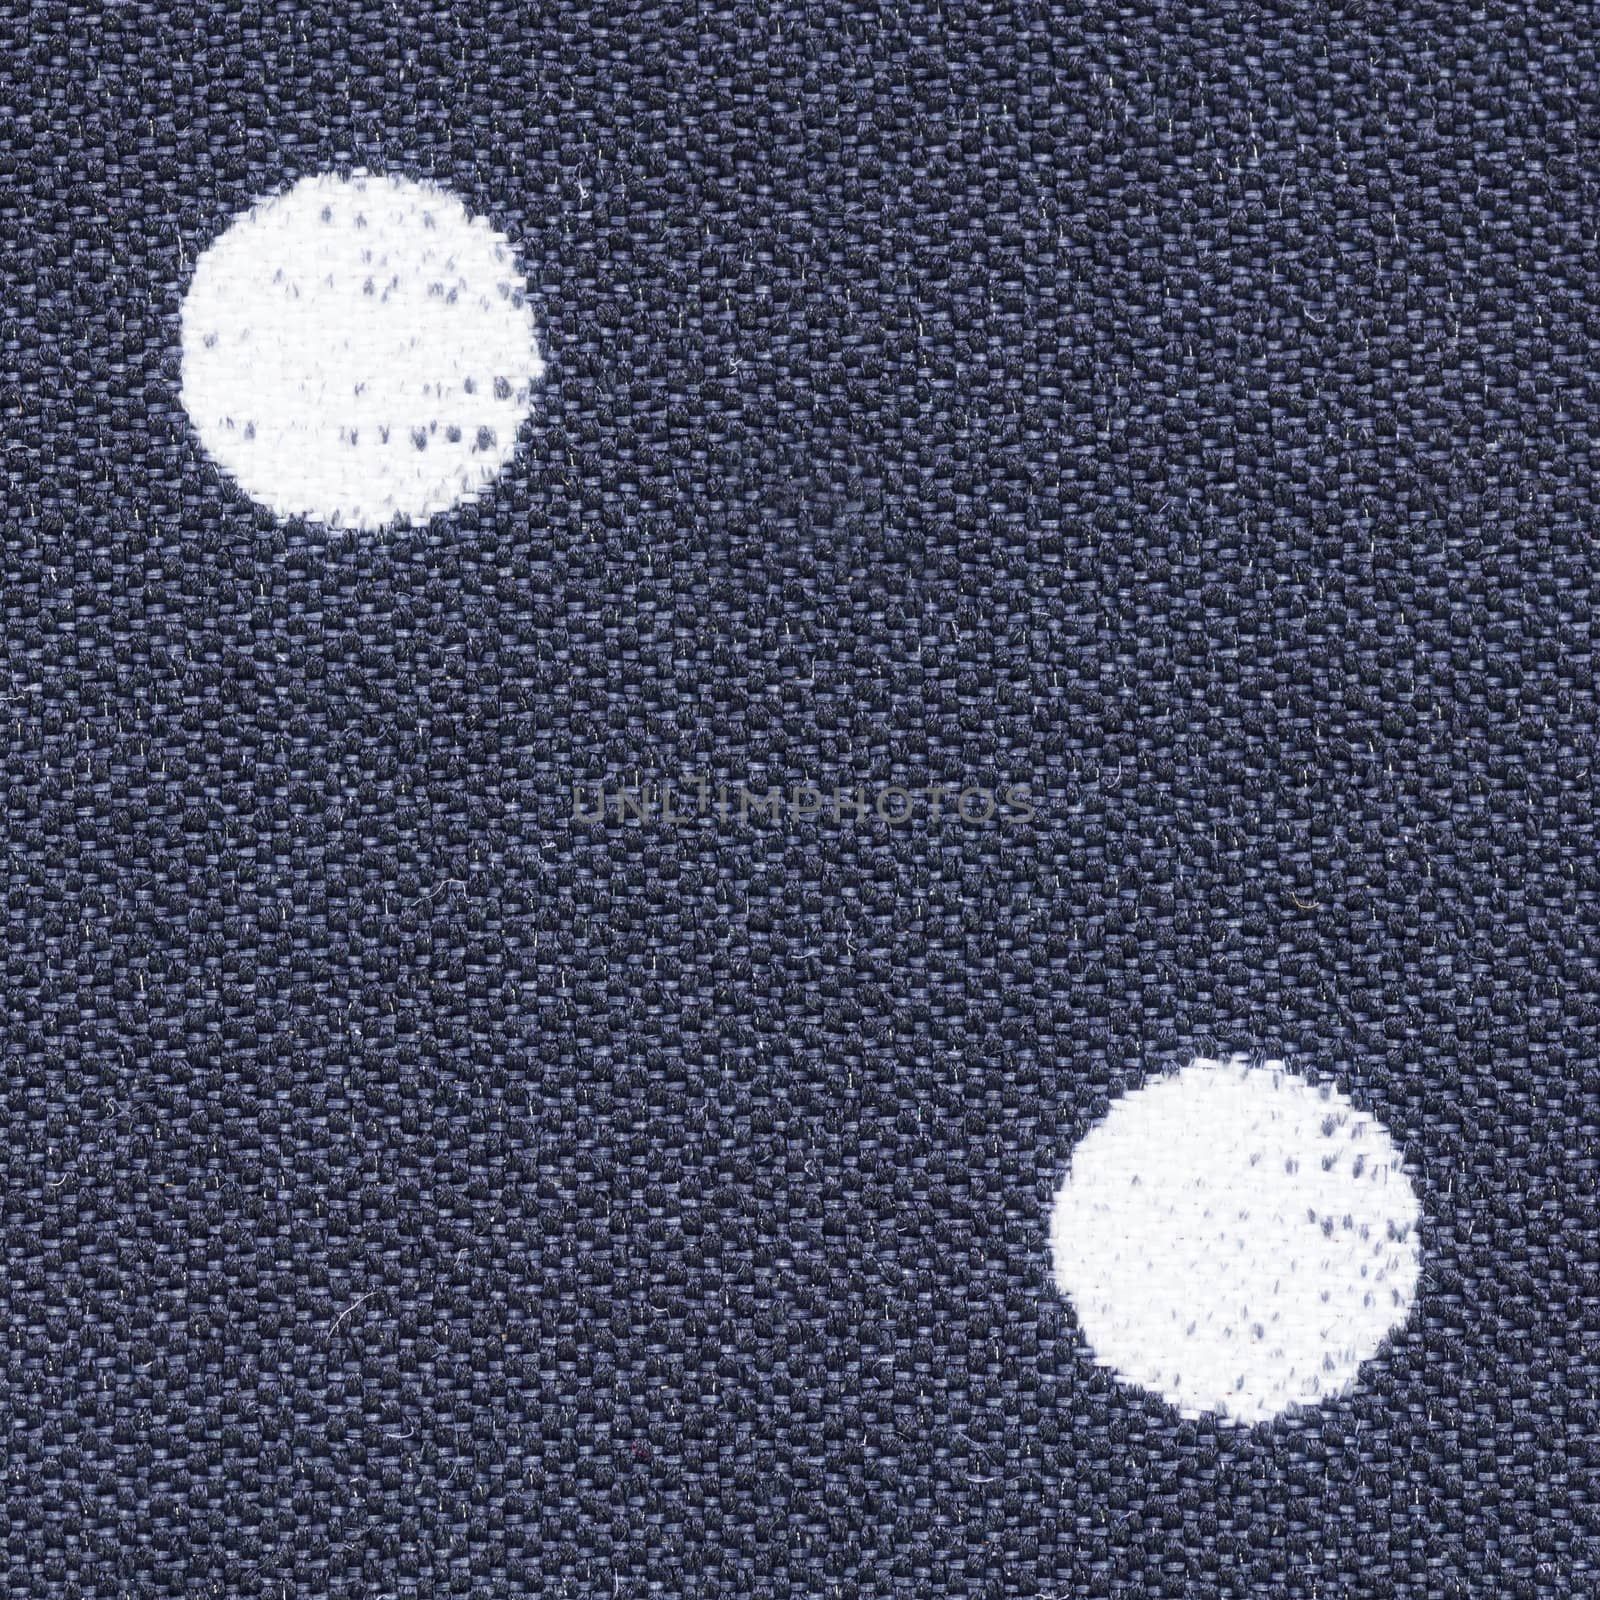 polka dot fabric texture by MikeNG